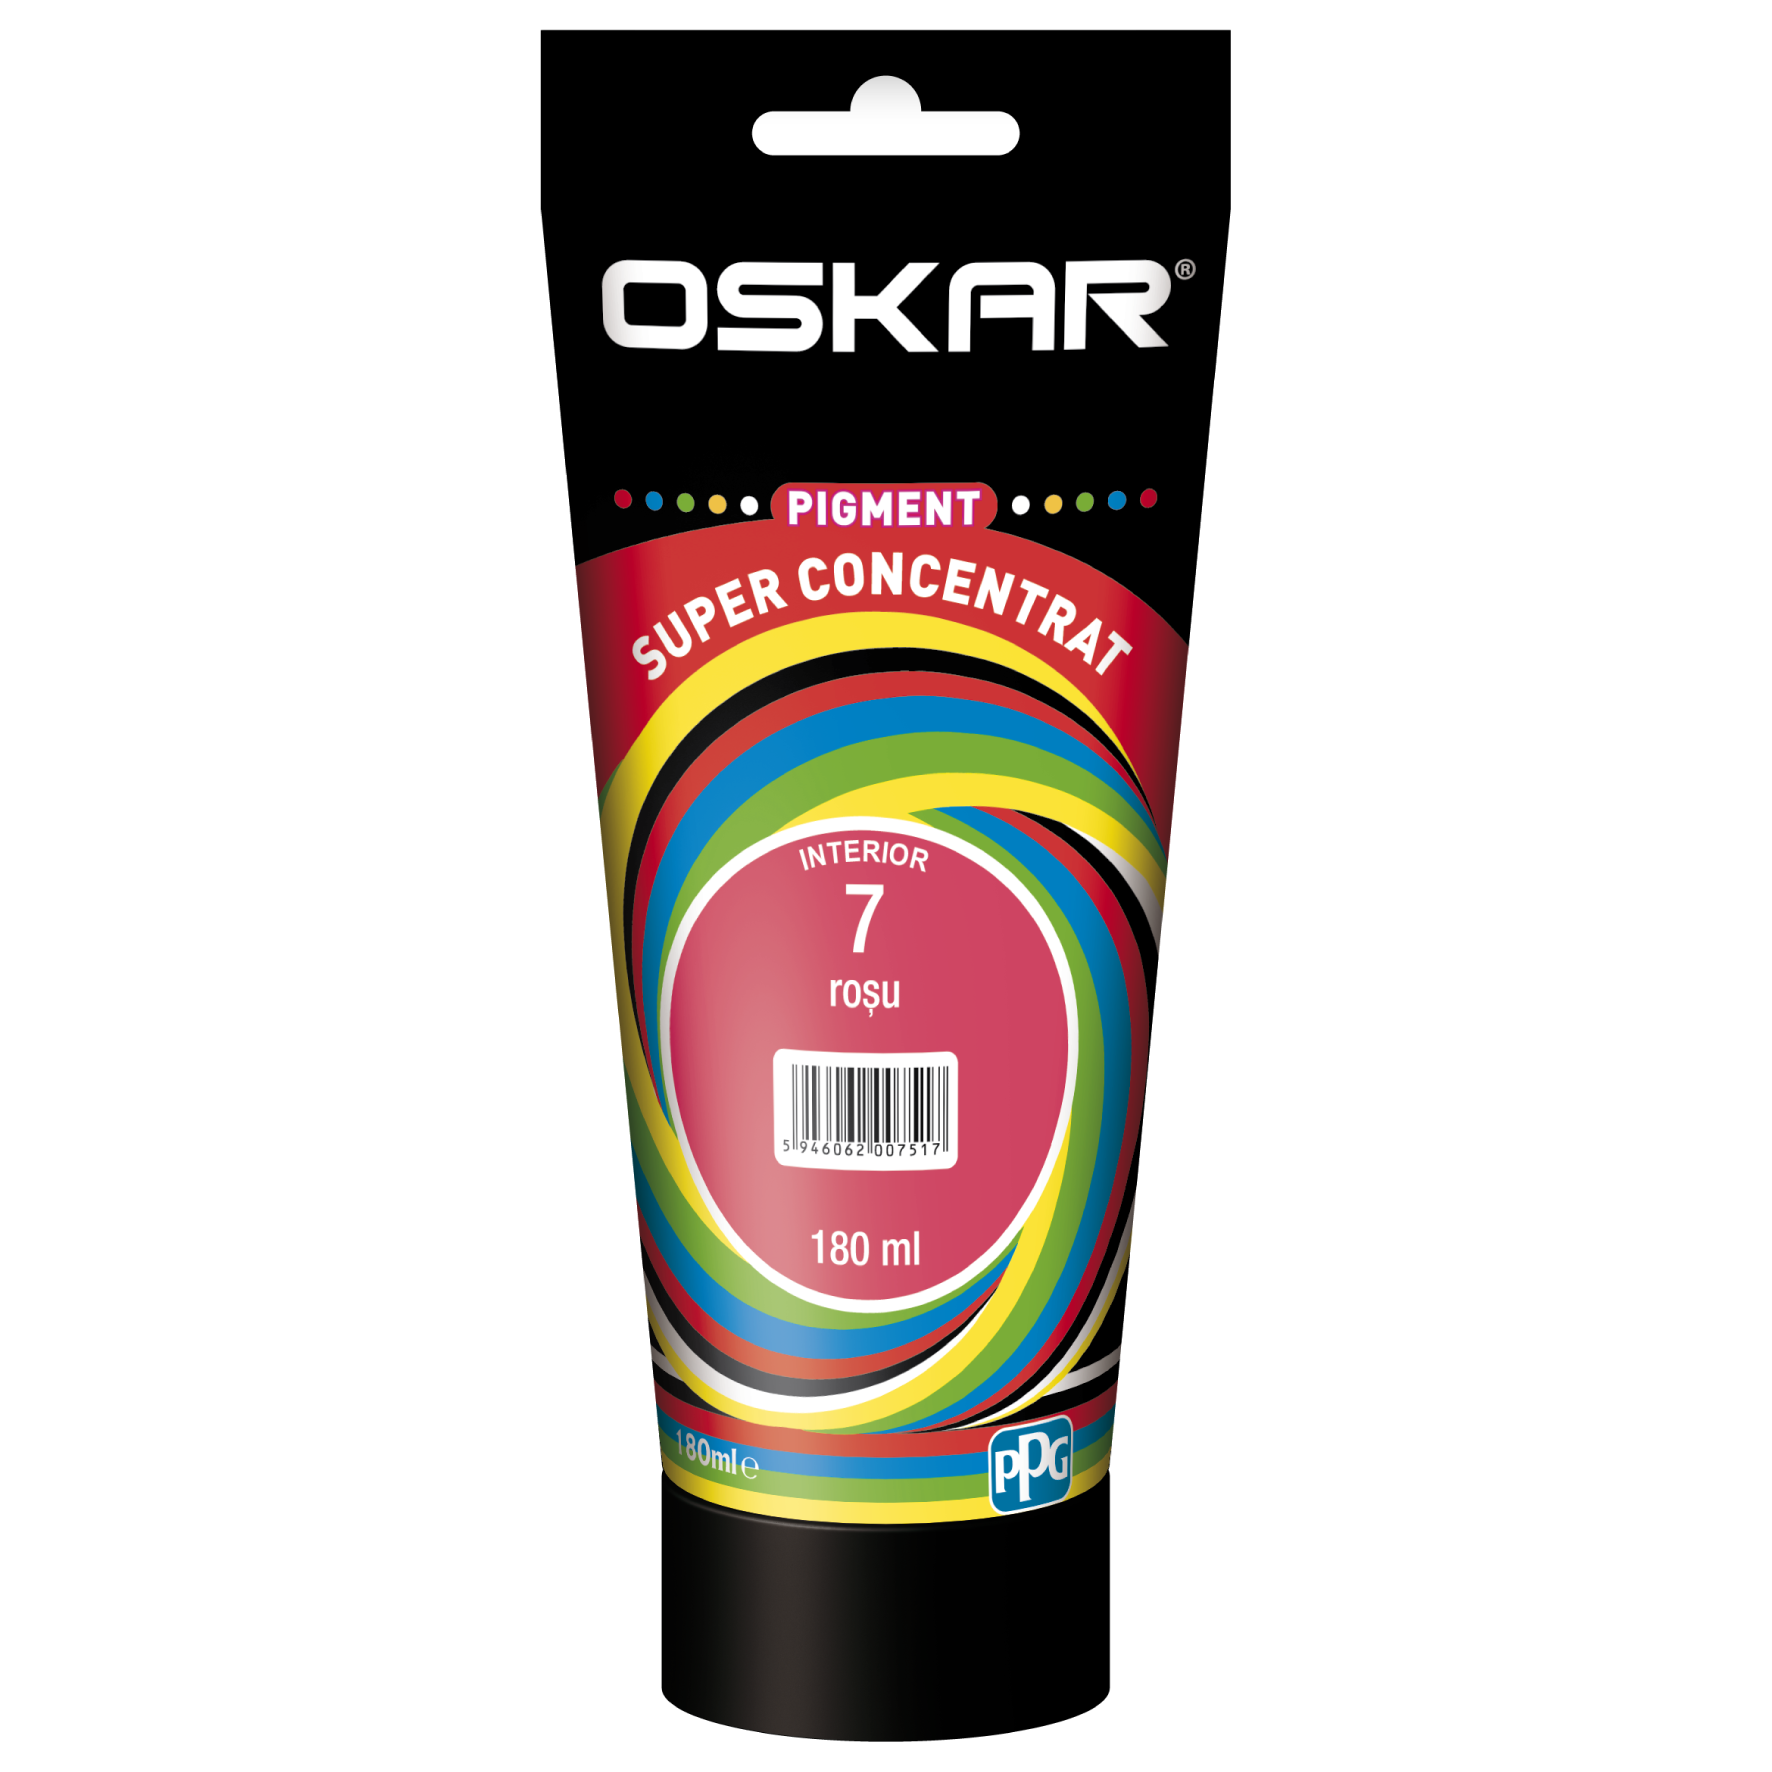 Pigment vopsea lavabila Oskar super concentrat, rosu 7, 180 ml 180